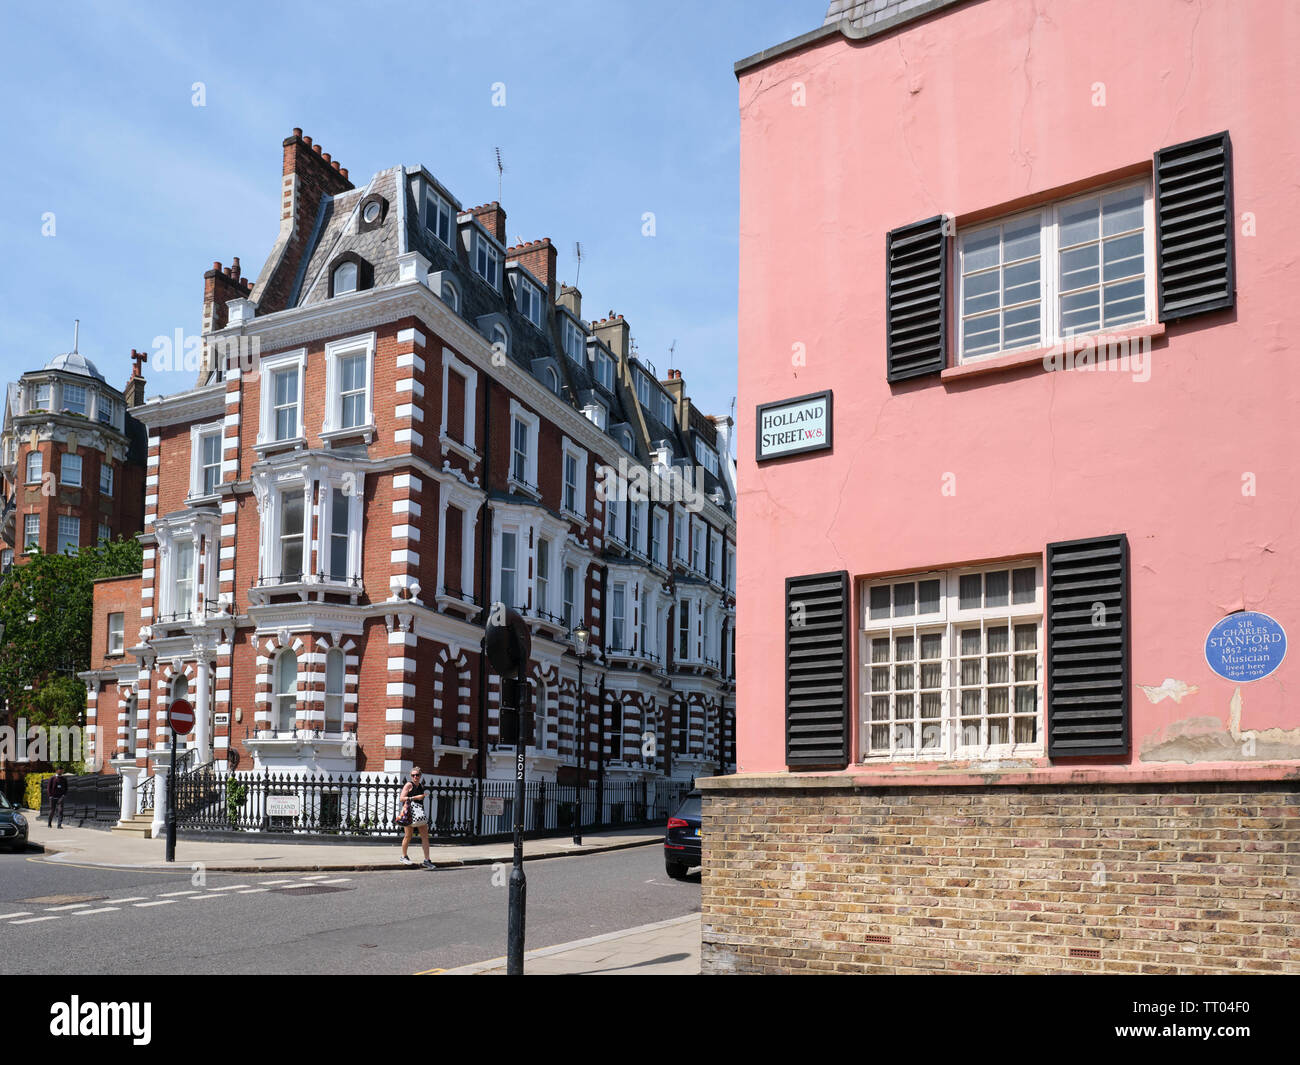 Beispiele Georgianischer Architektur in Kensington, London, England, UK. Stockfoto